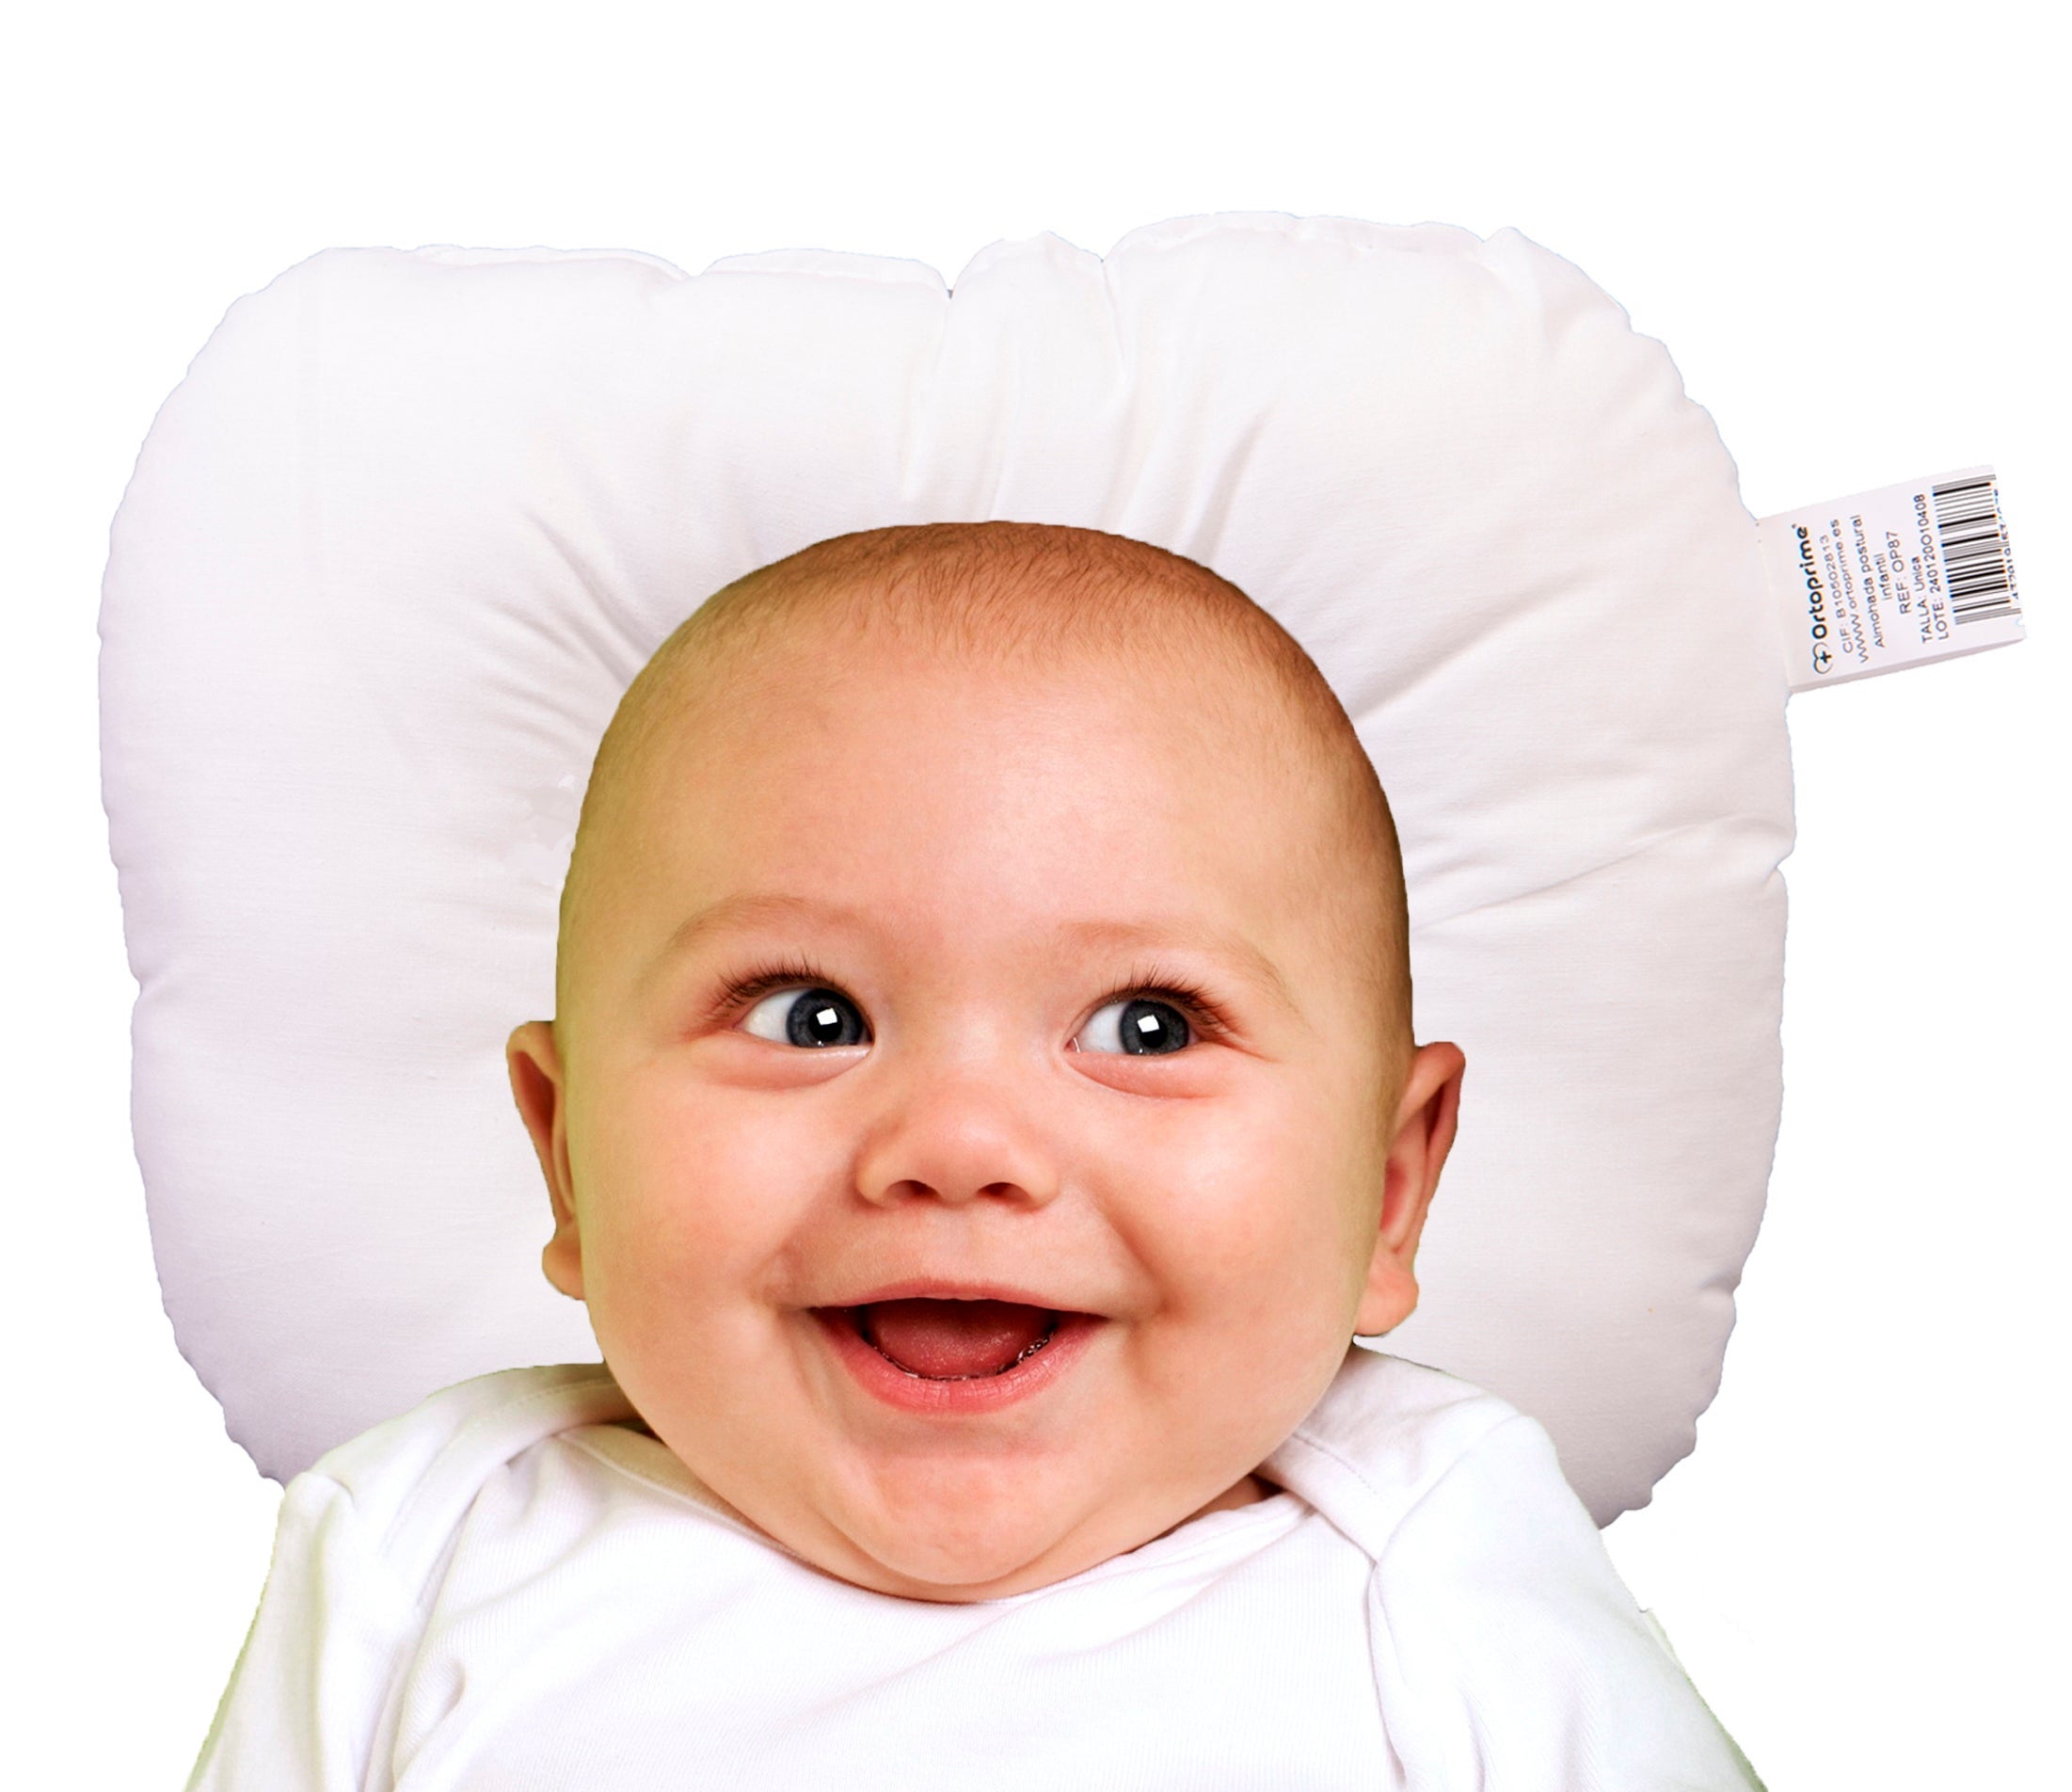 Comprar Almohada ergonómica para bebés Plagiocefalia online, El